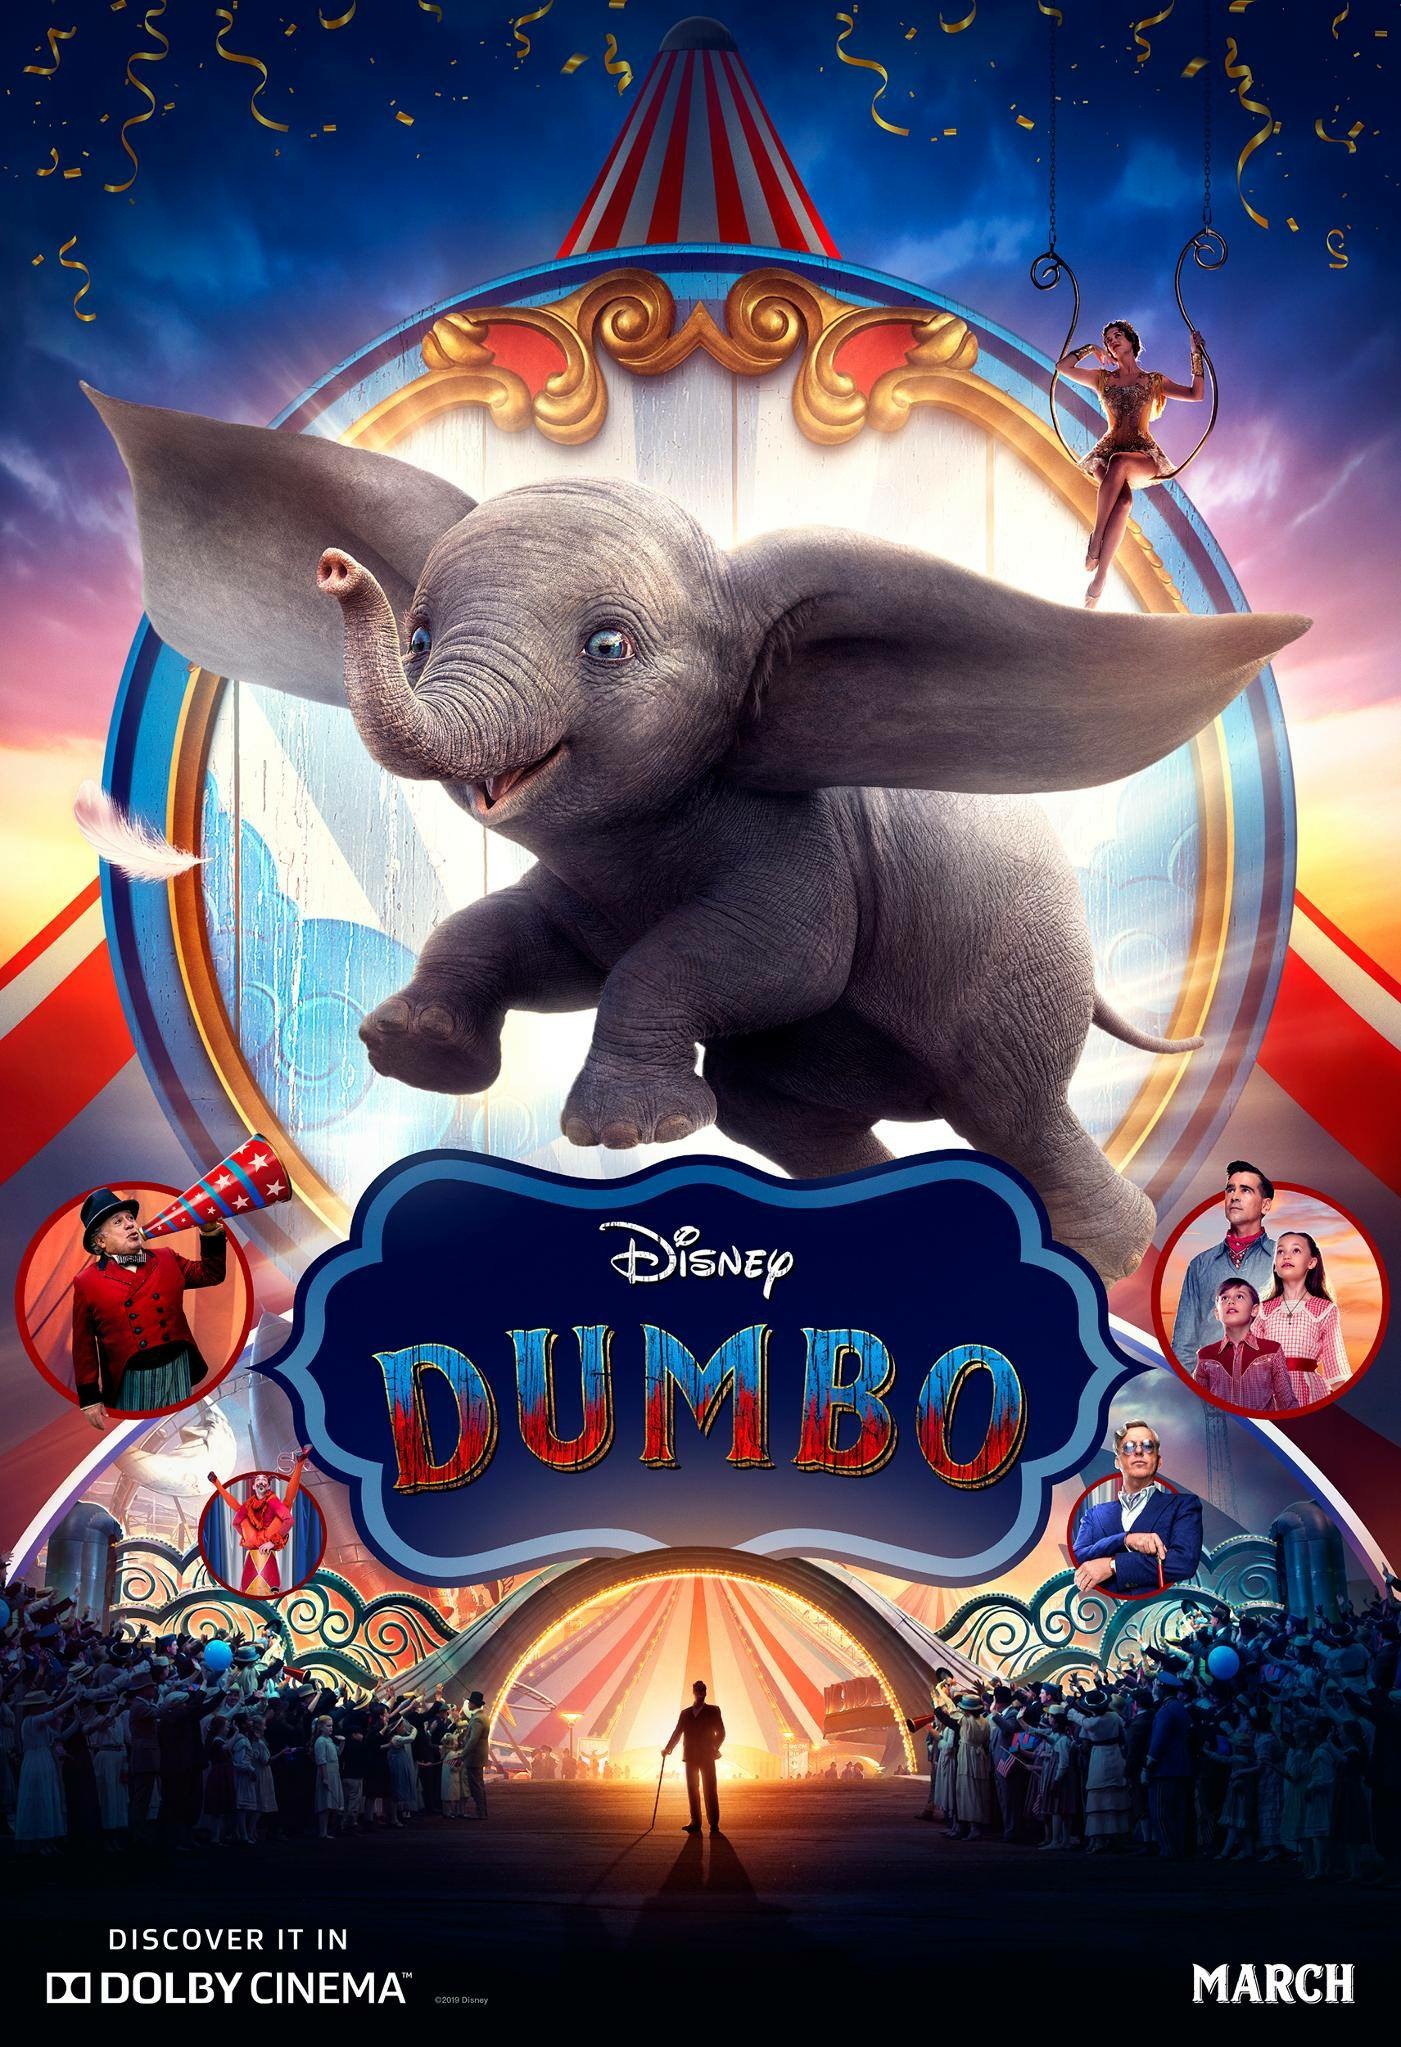 Mega Sized Movie Poster Image for Dumbo (#18 of 21)